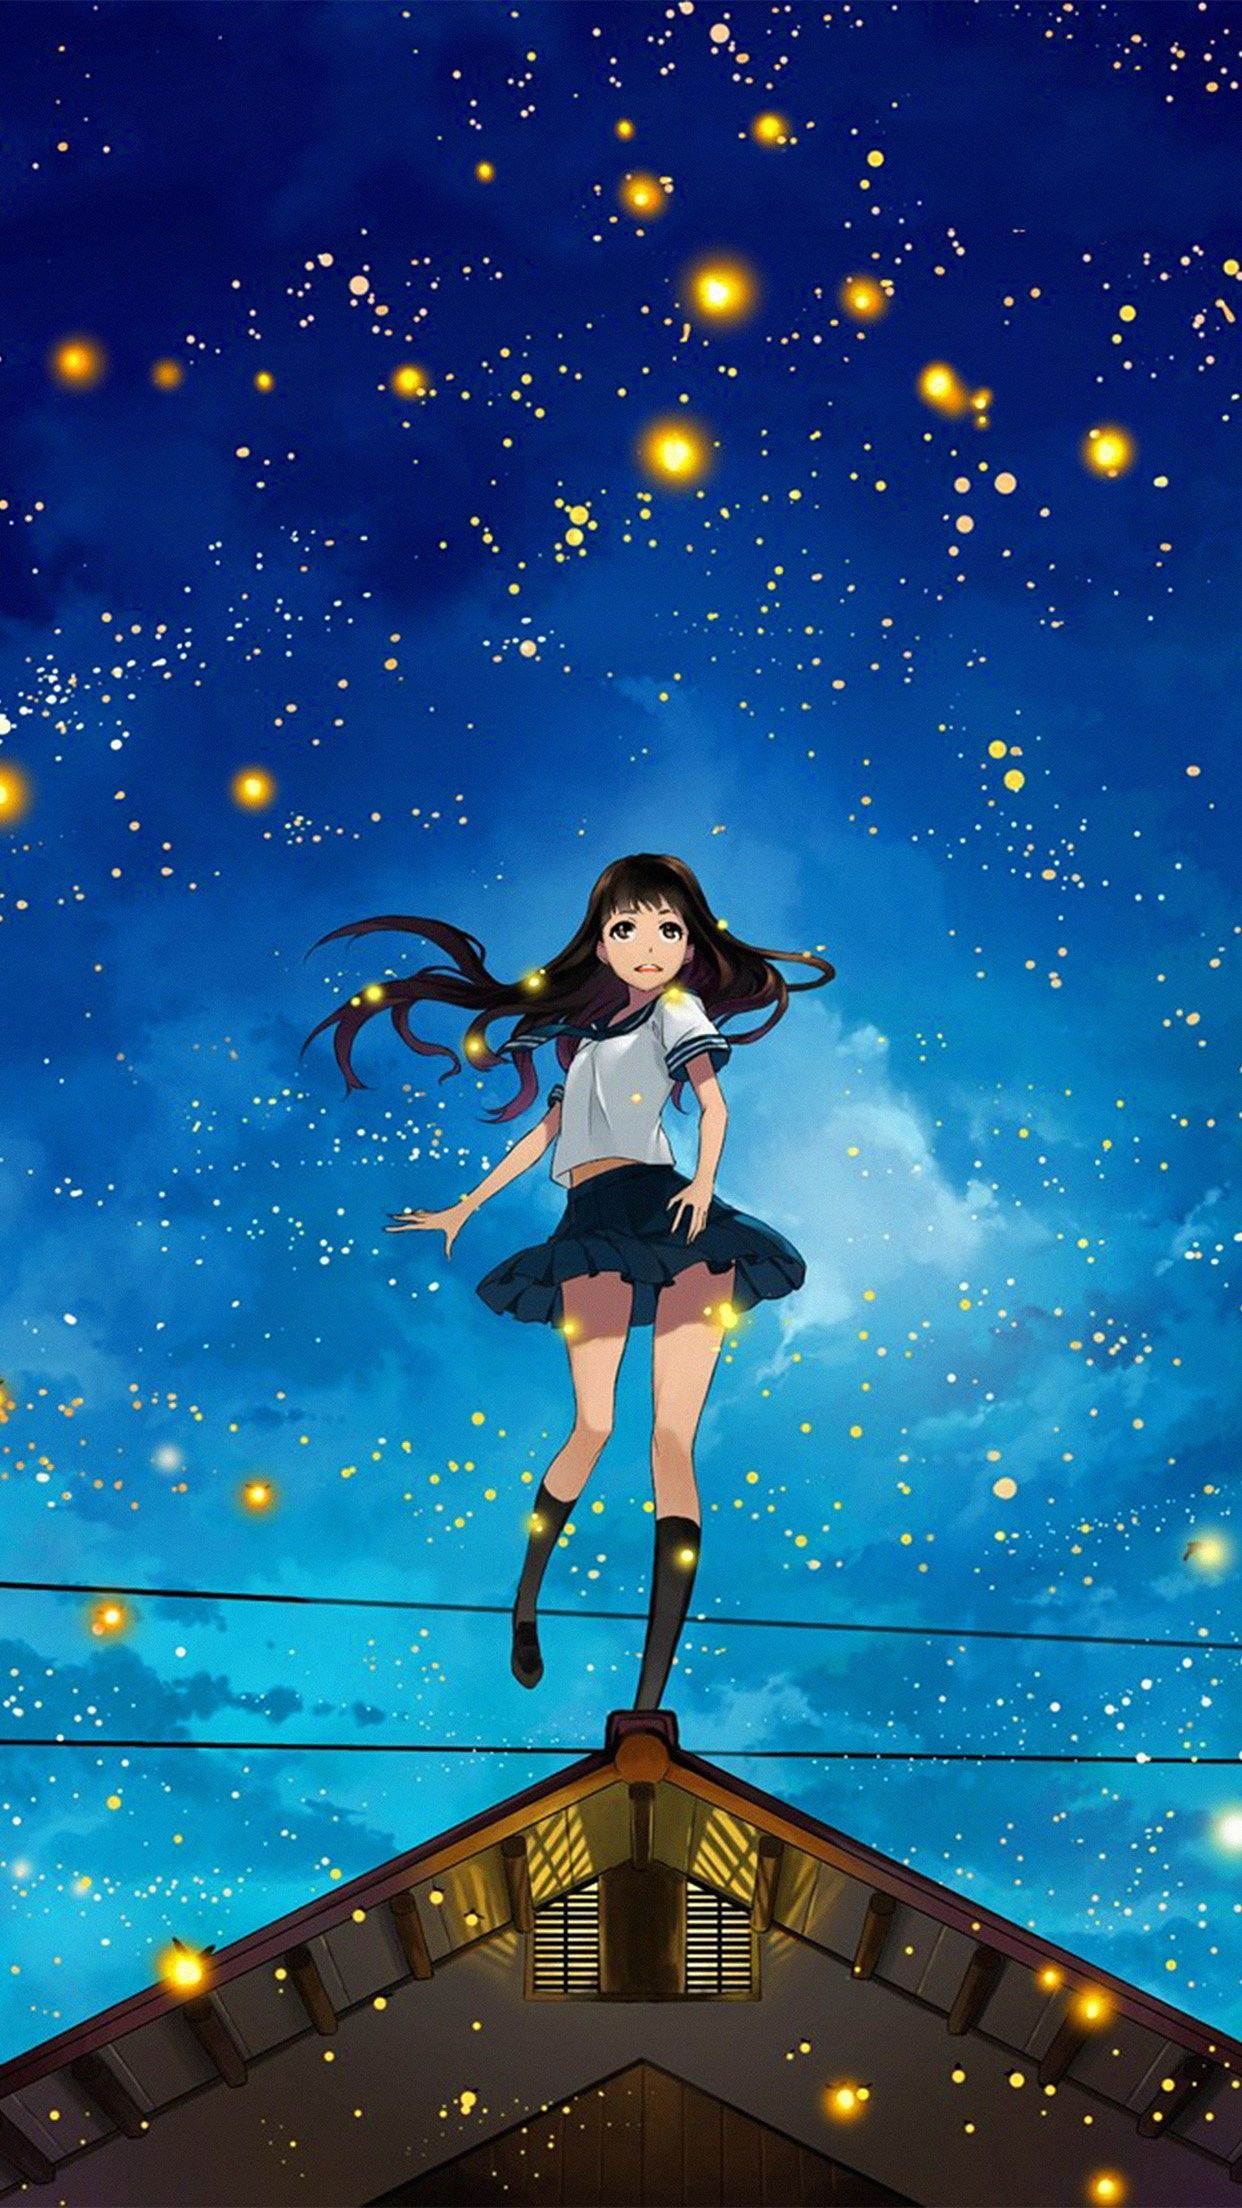 Aesthetic Anime iPhone Wallpaper